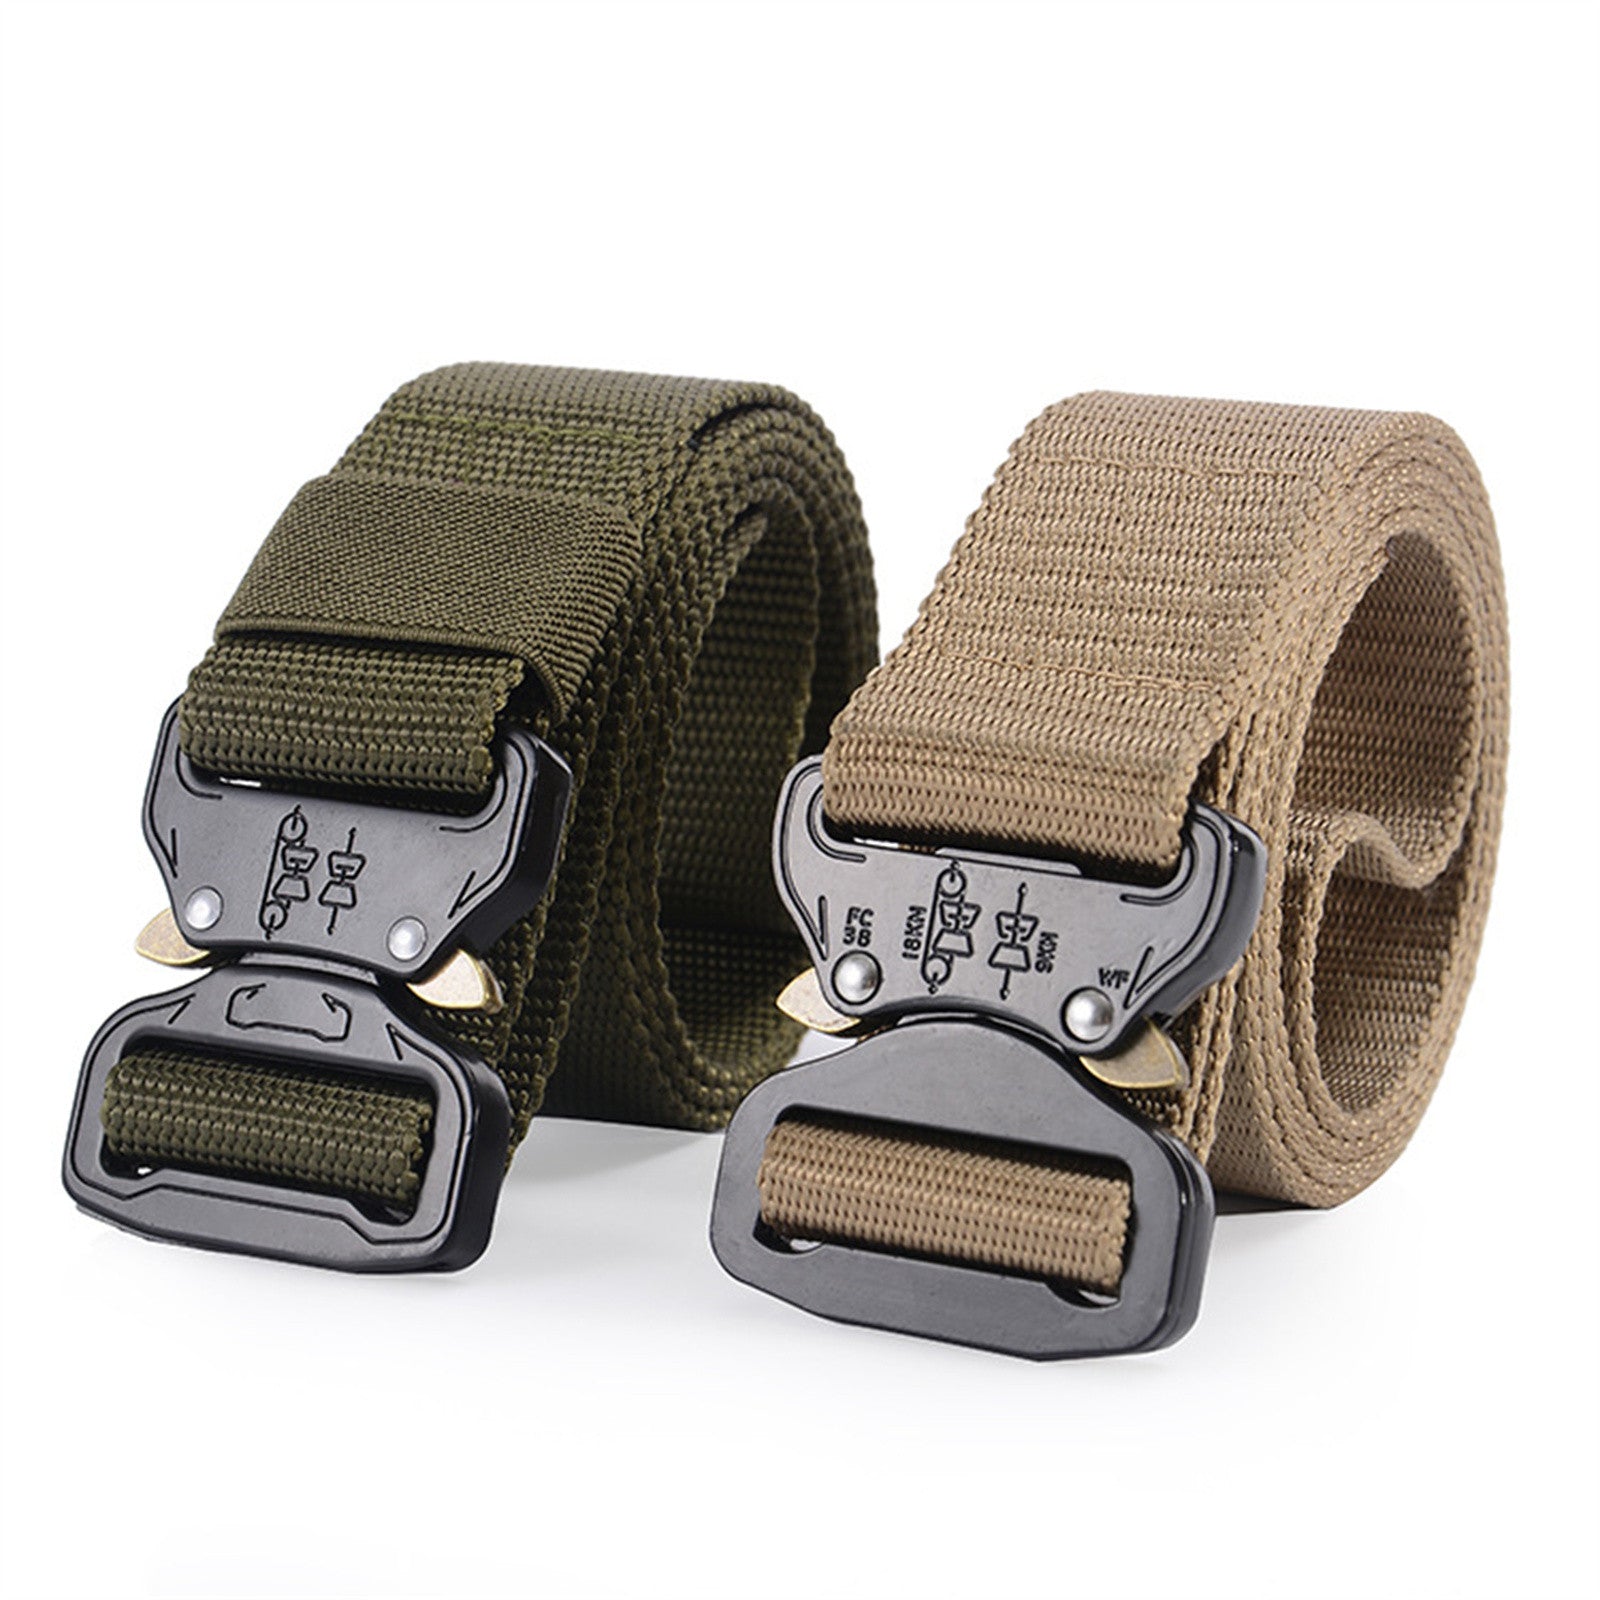 Multifunctional Men's Outdoor Tactical Belt Outside Military Training Belt Green